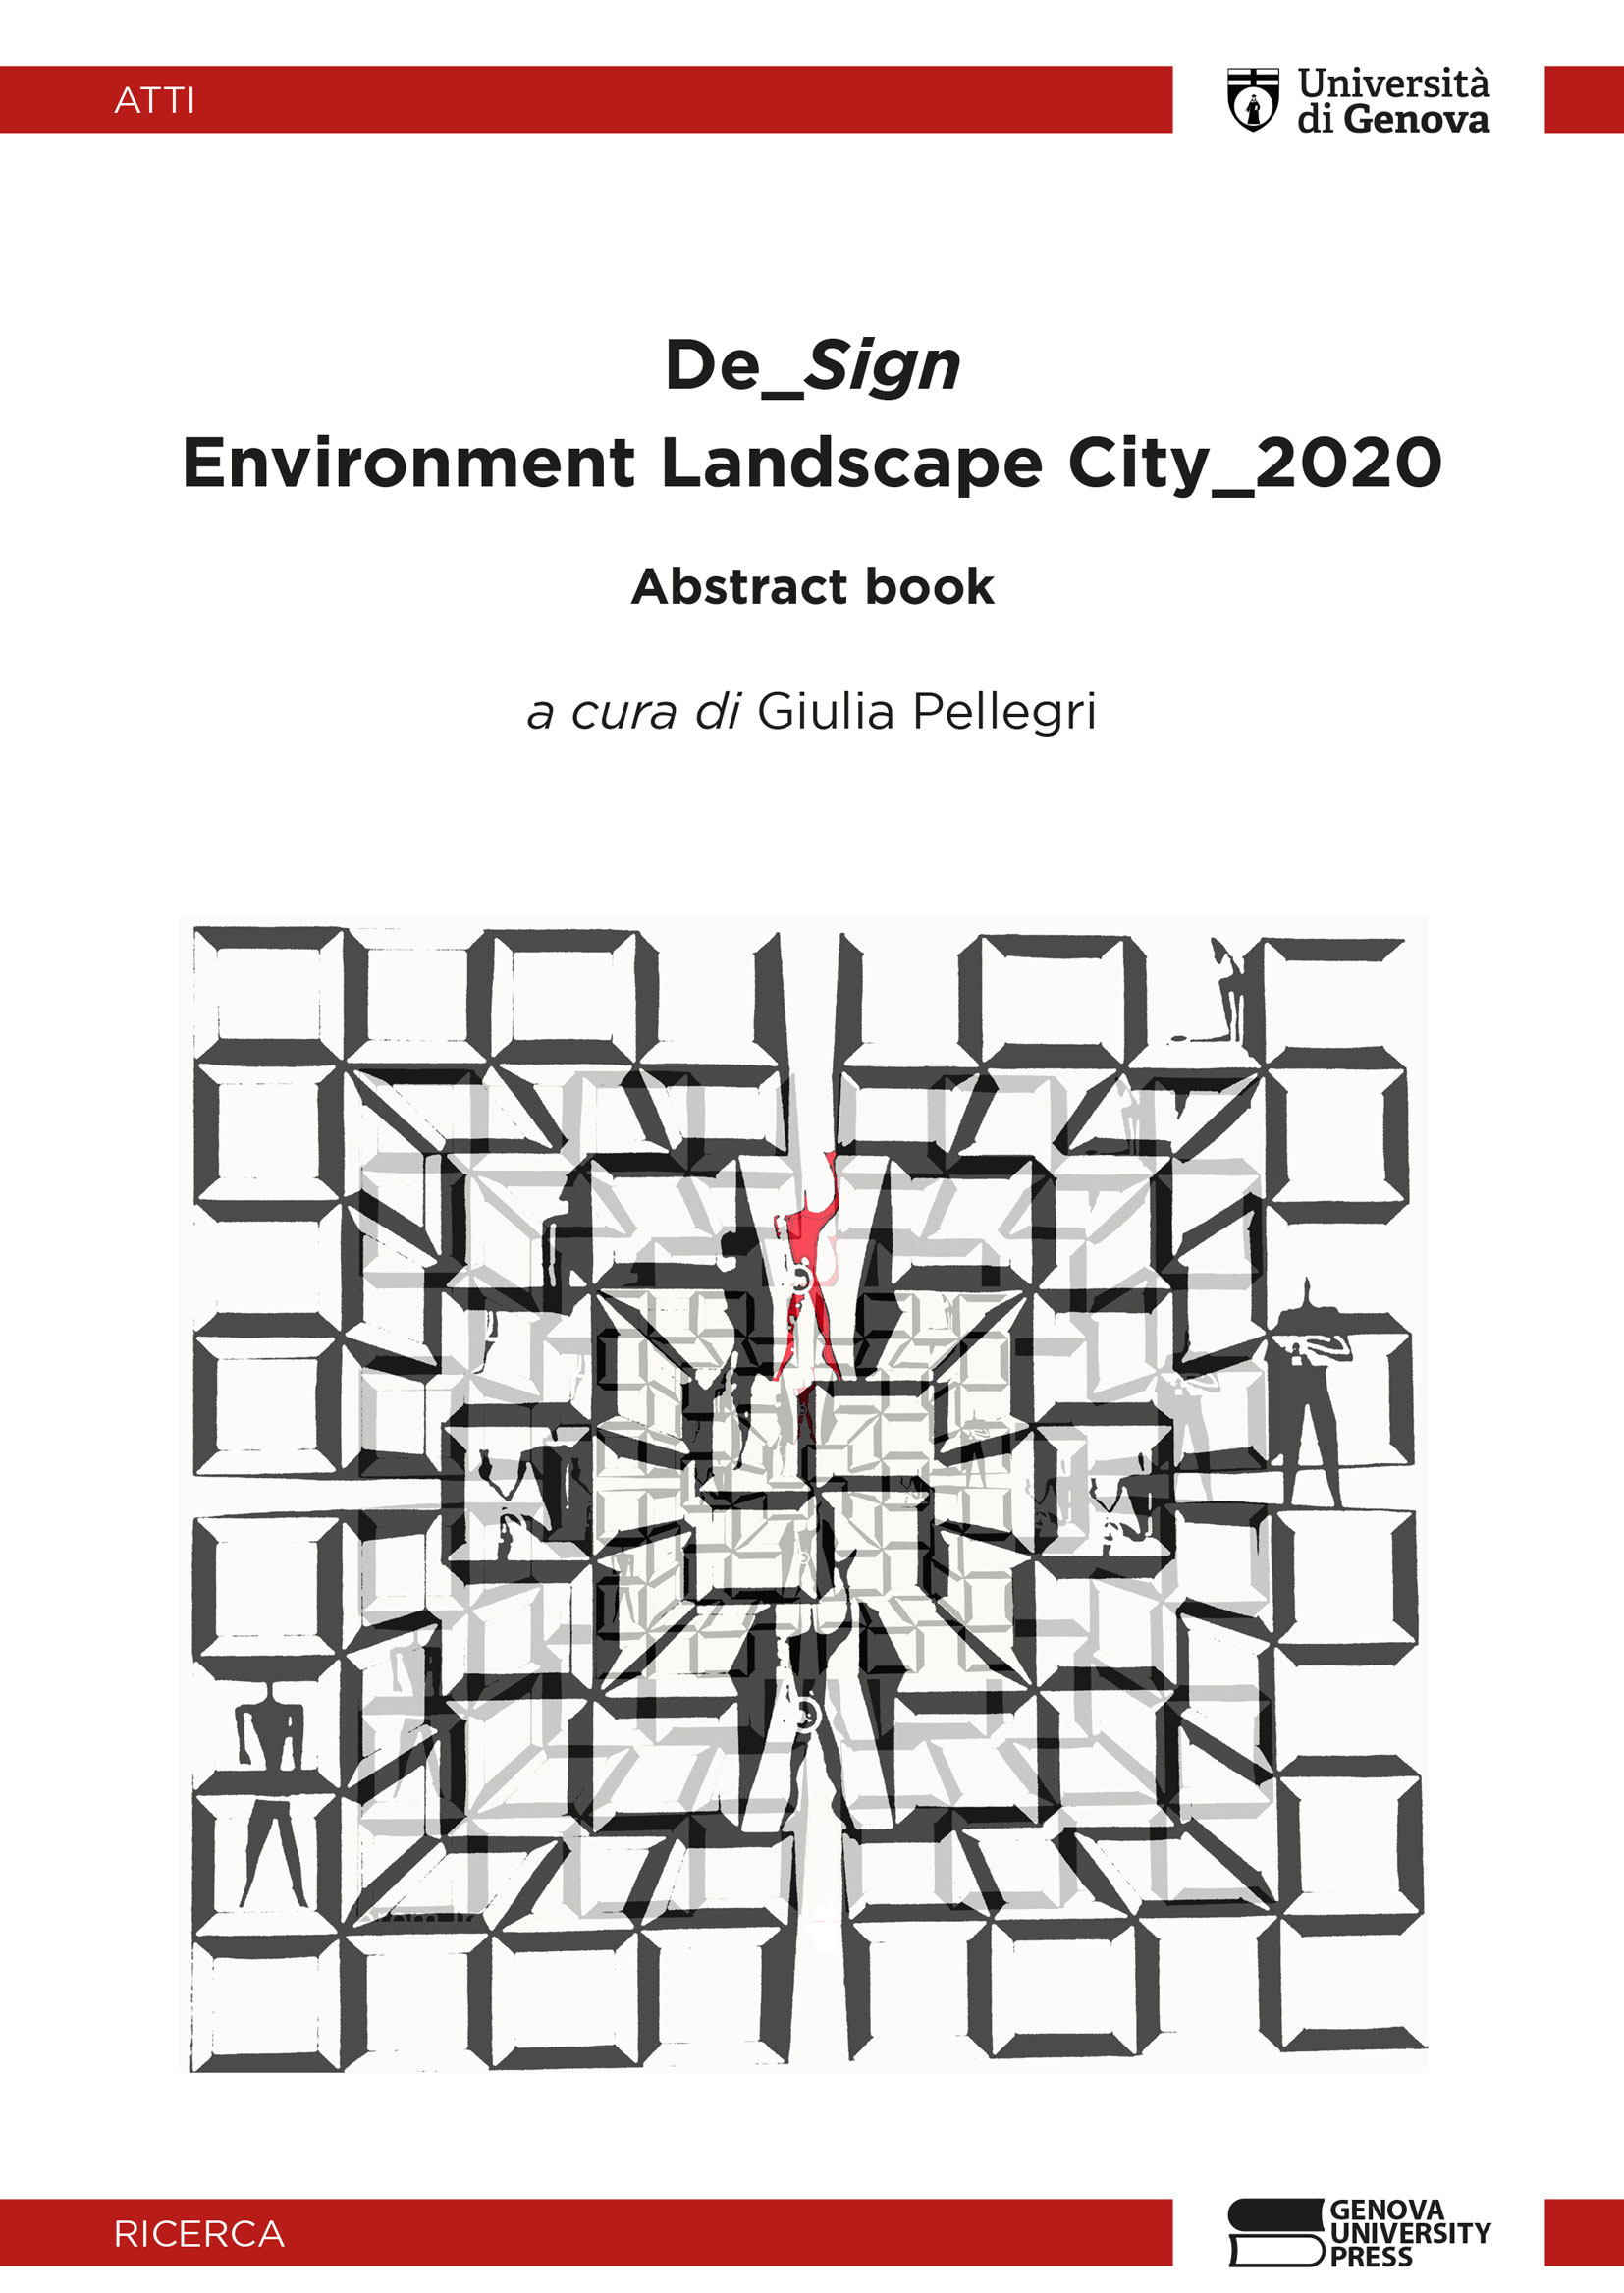 De_Sign Environment Landscape City_2020 - Abstract book